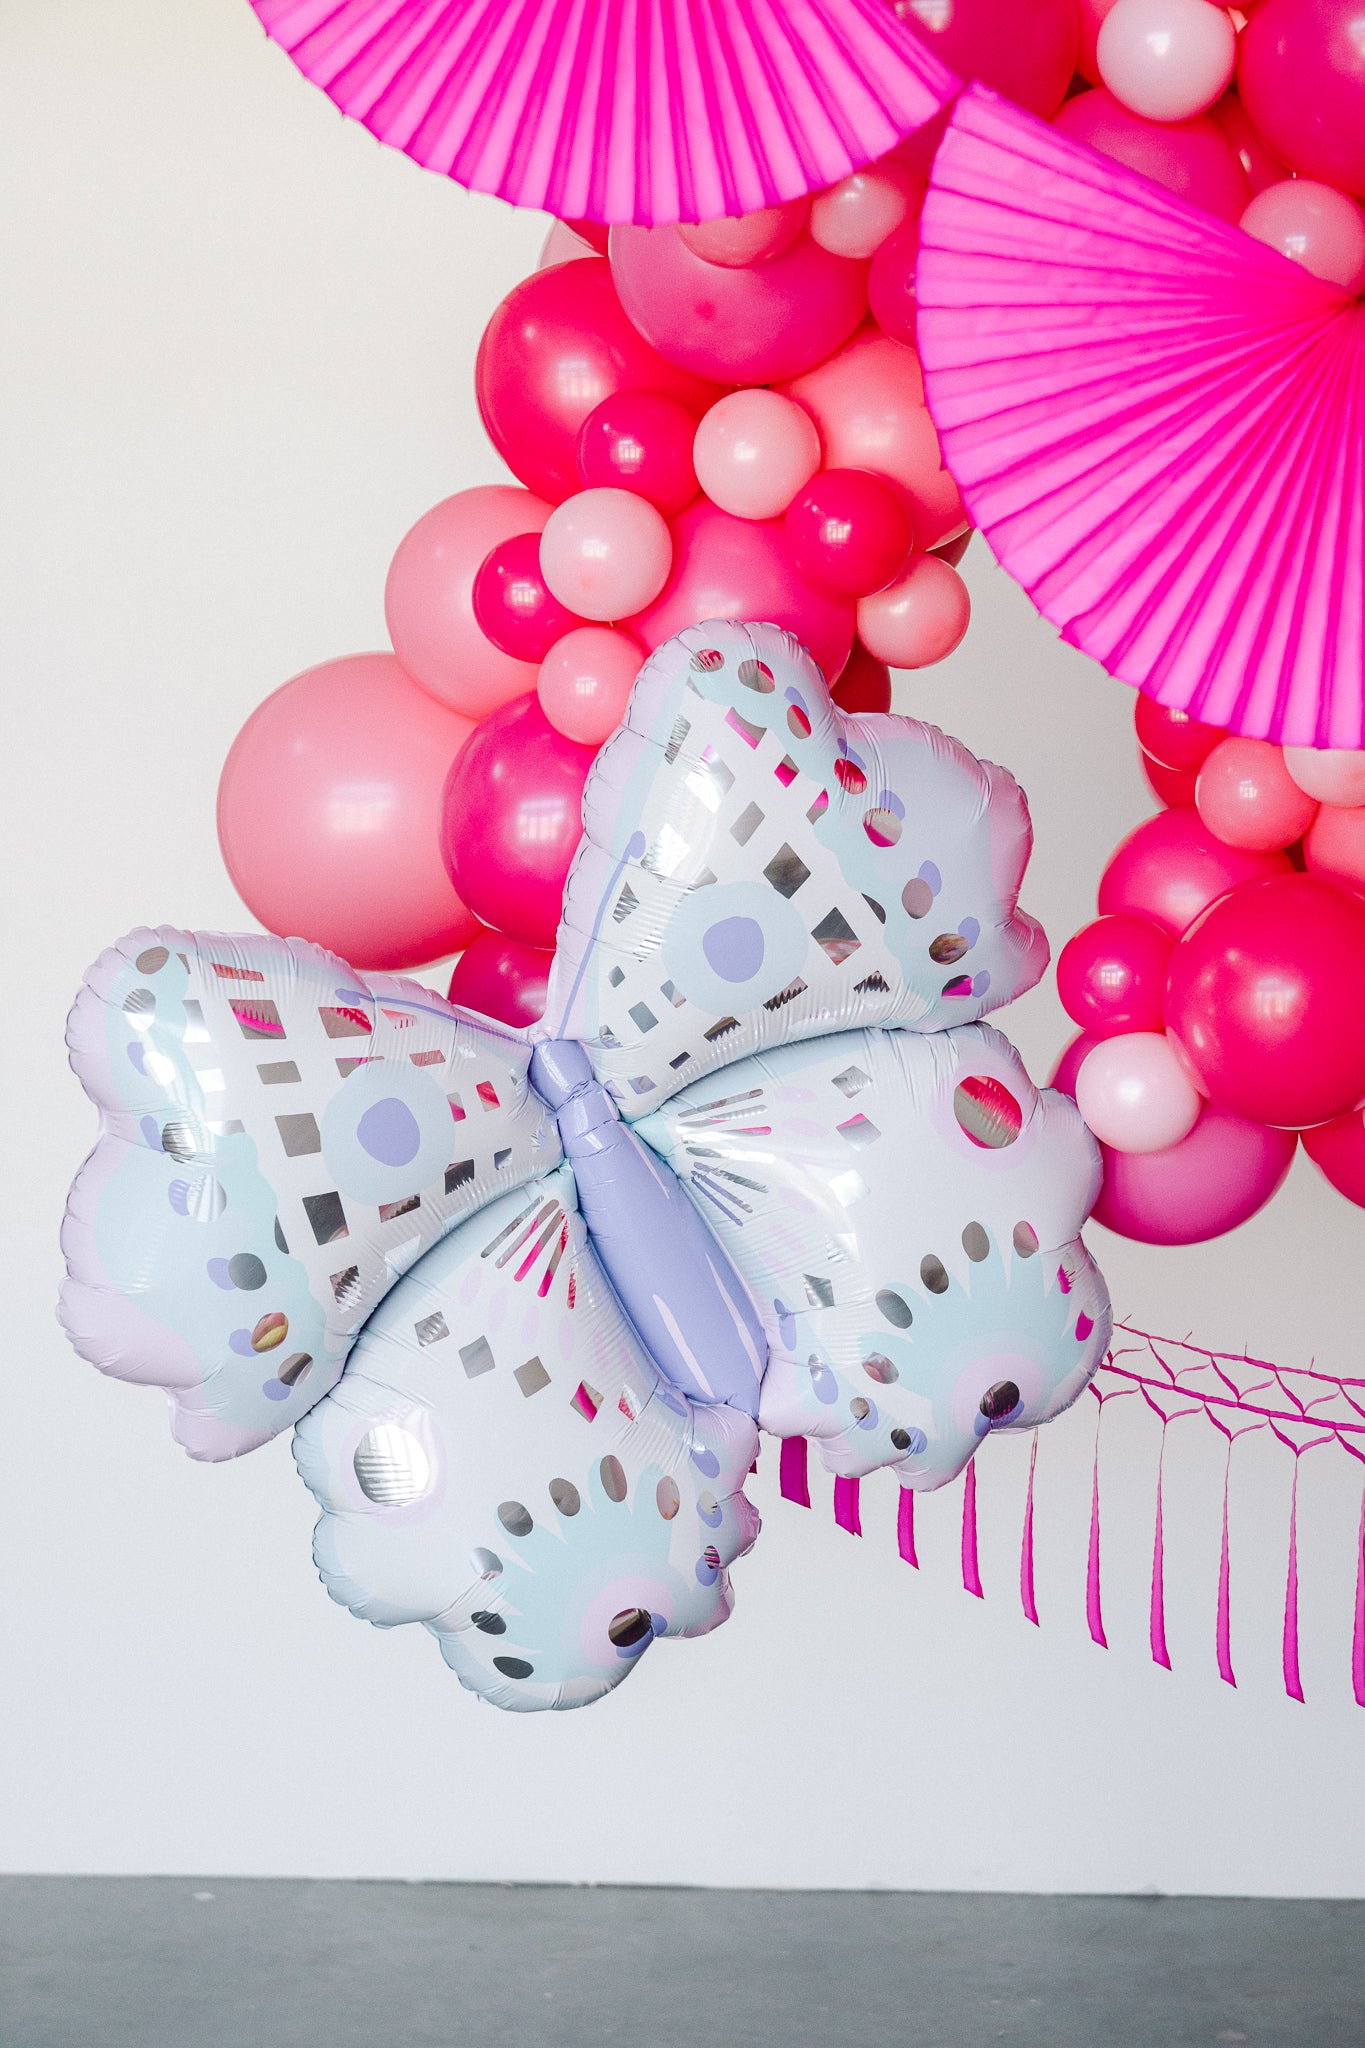  Encanto Birthday Party Supplies Balloon Bouquet Decorations :  Toys & Games